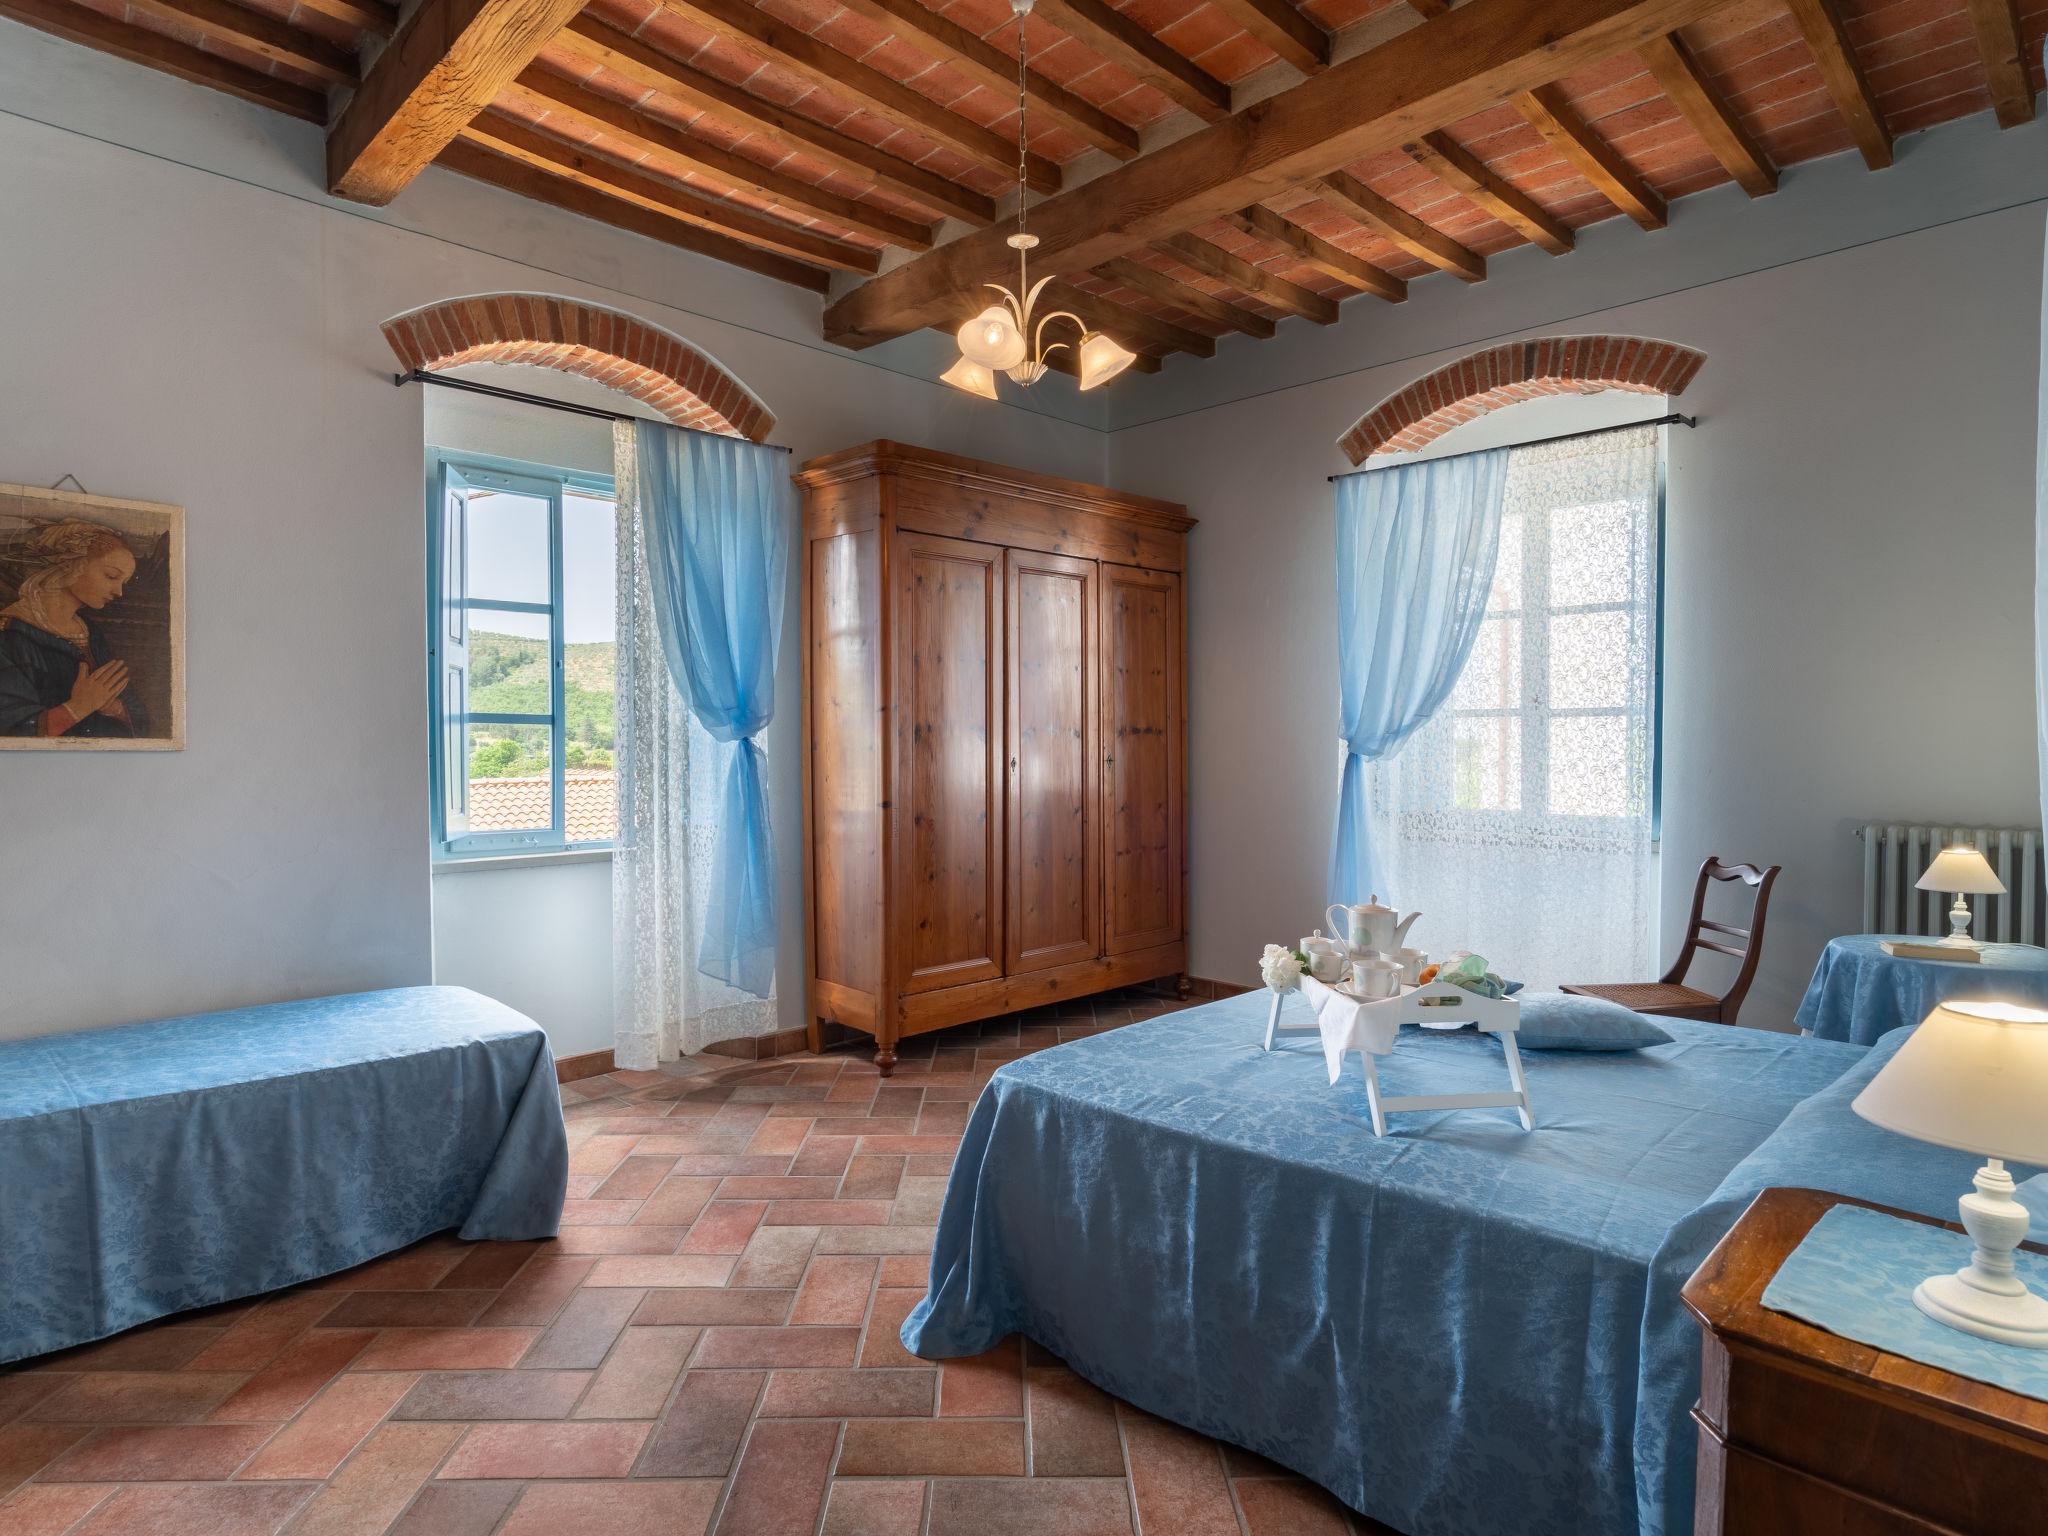 Photo 6 - Maison de 2 chambres à Castiglion Fiorentino avec piscine privée et jardin